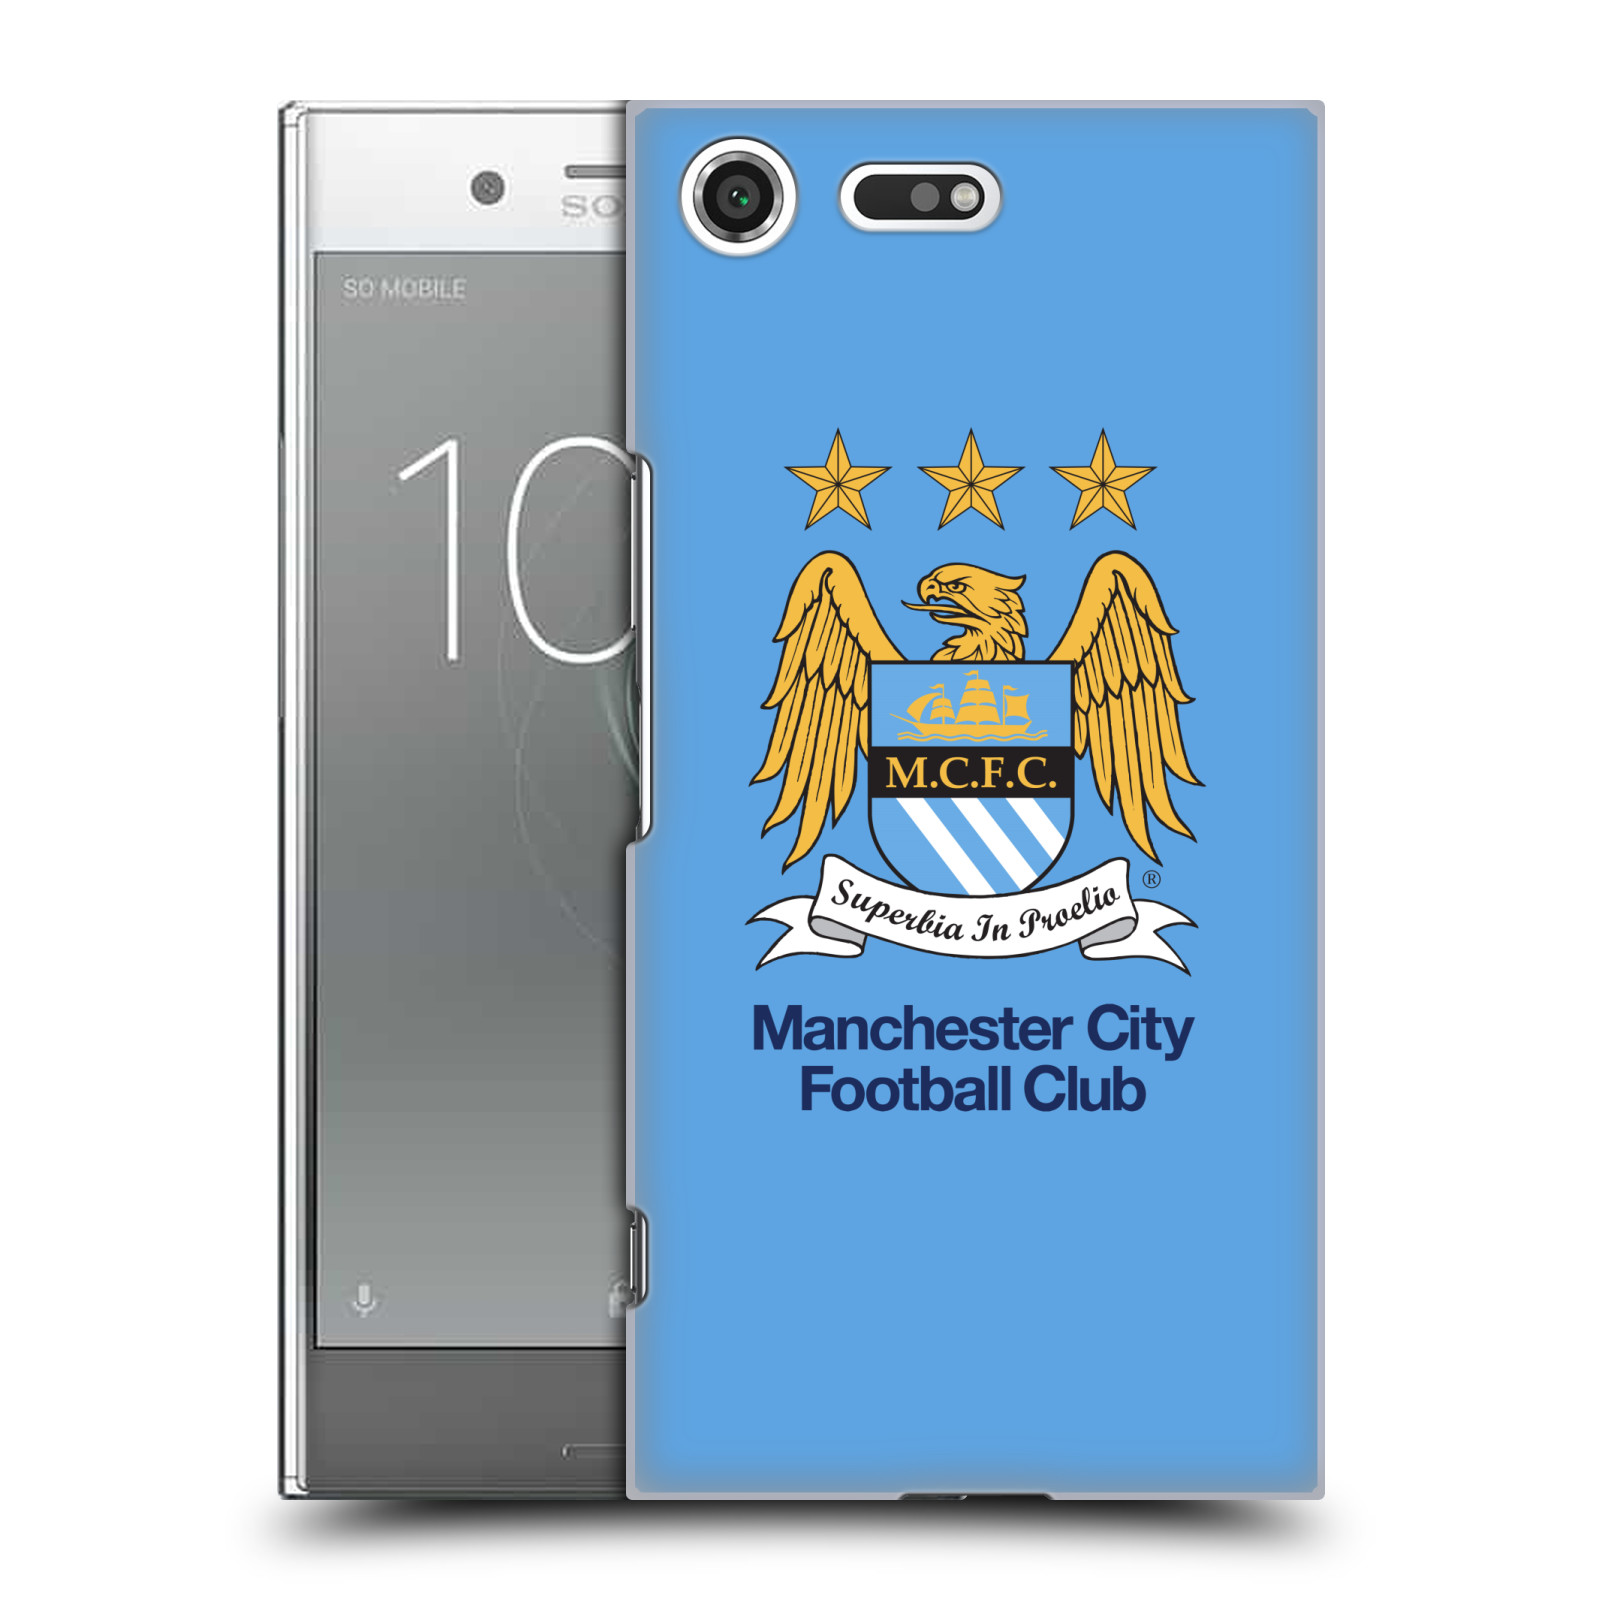 HEAD CASE plastový obal na mobil Sony Xperia XZ PREMIUM Fotbalový klub Manchester City nebesky modrá pozadí velký znak pták